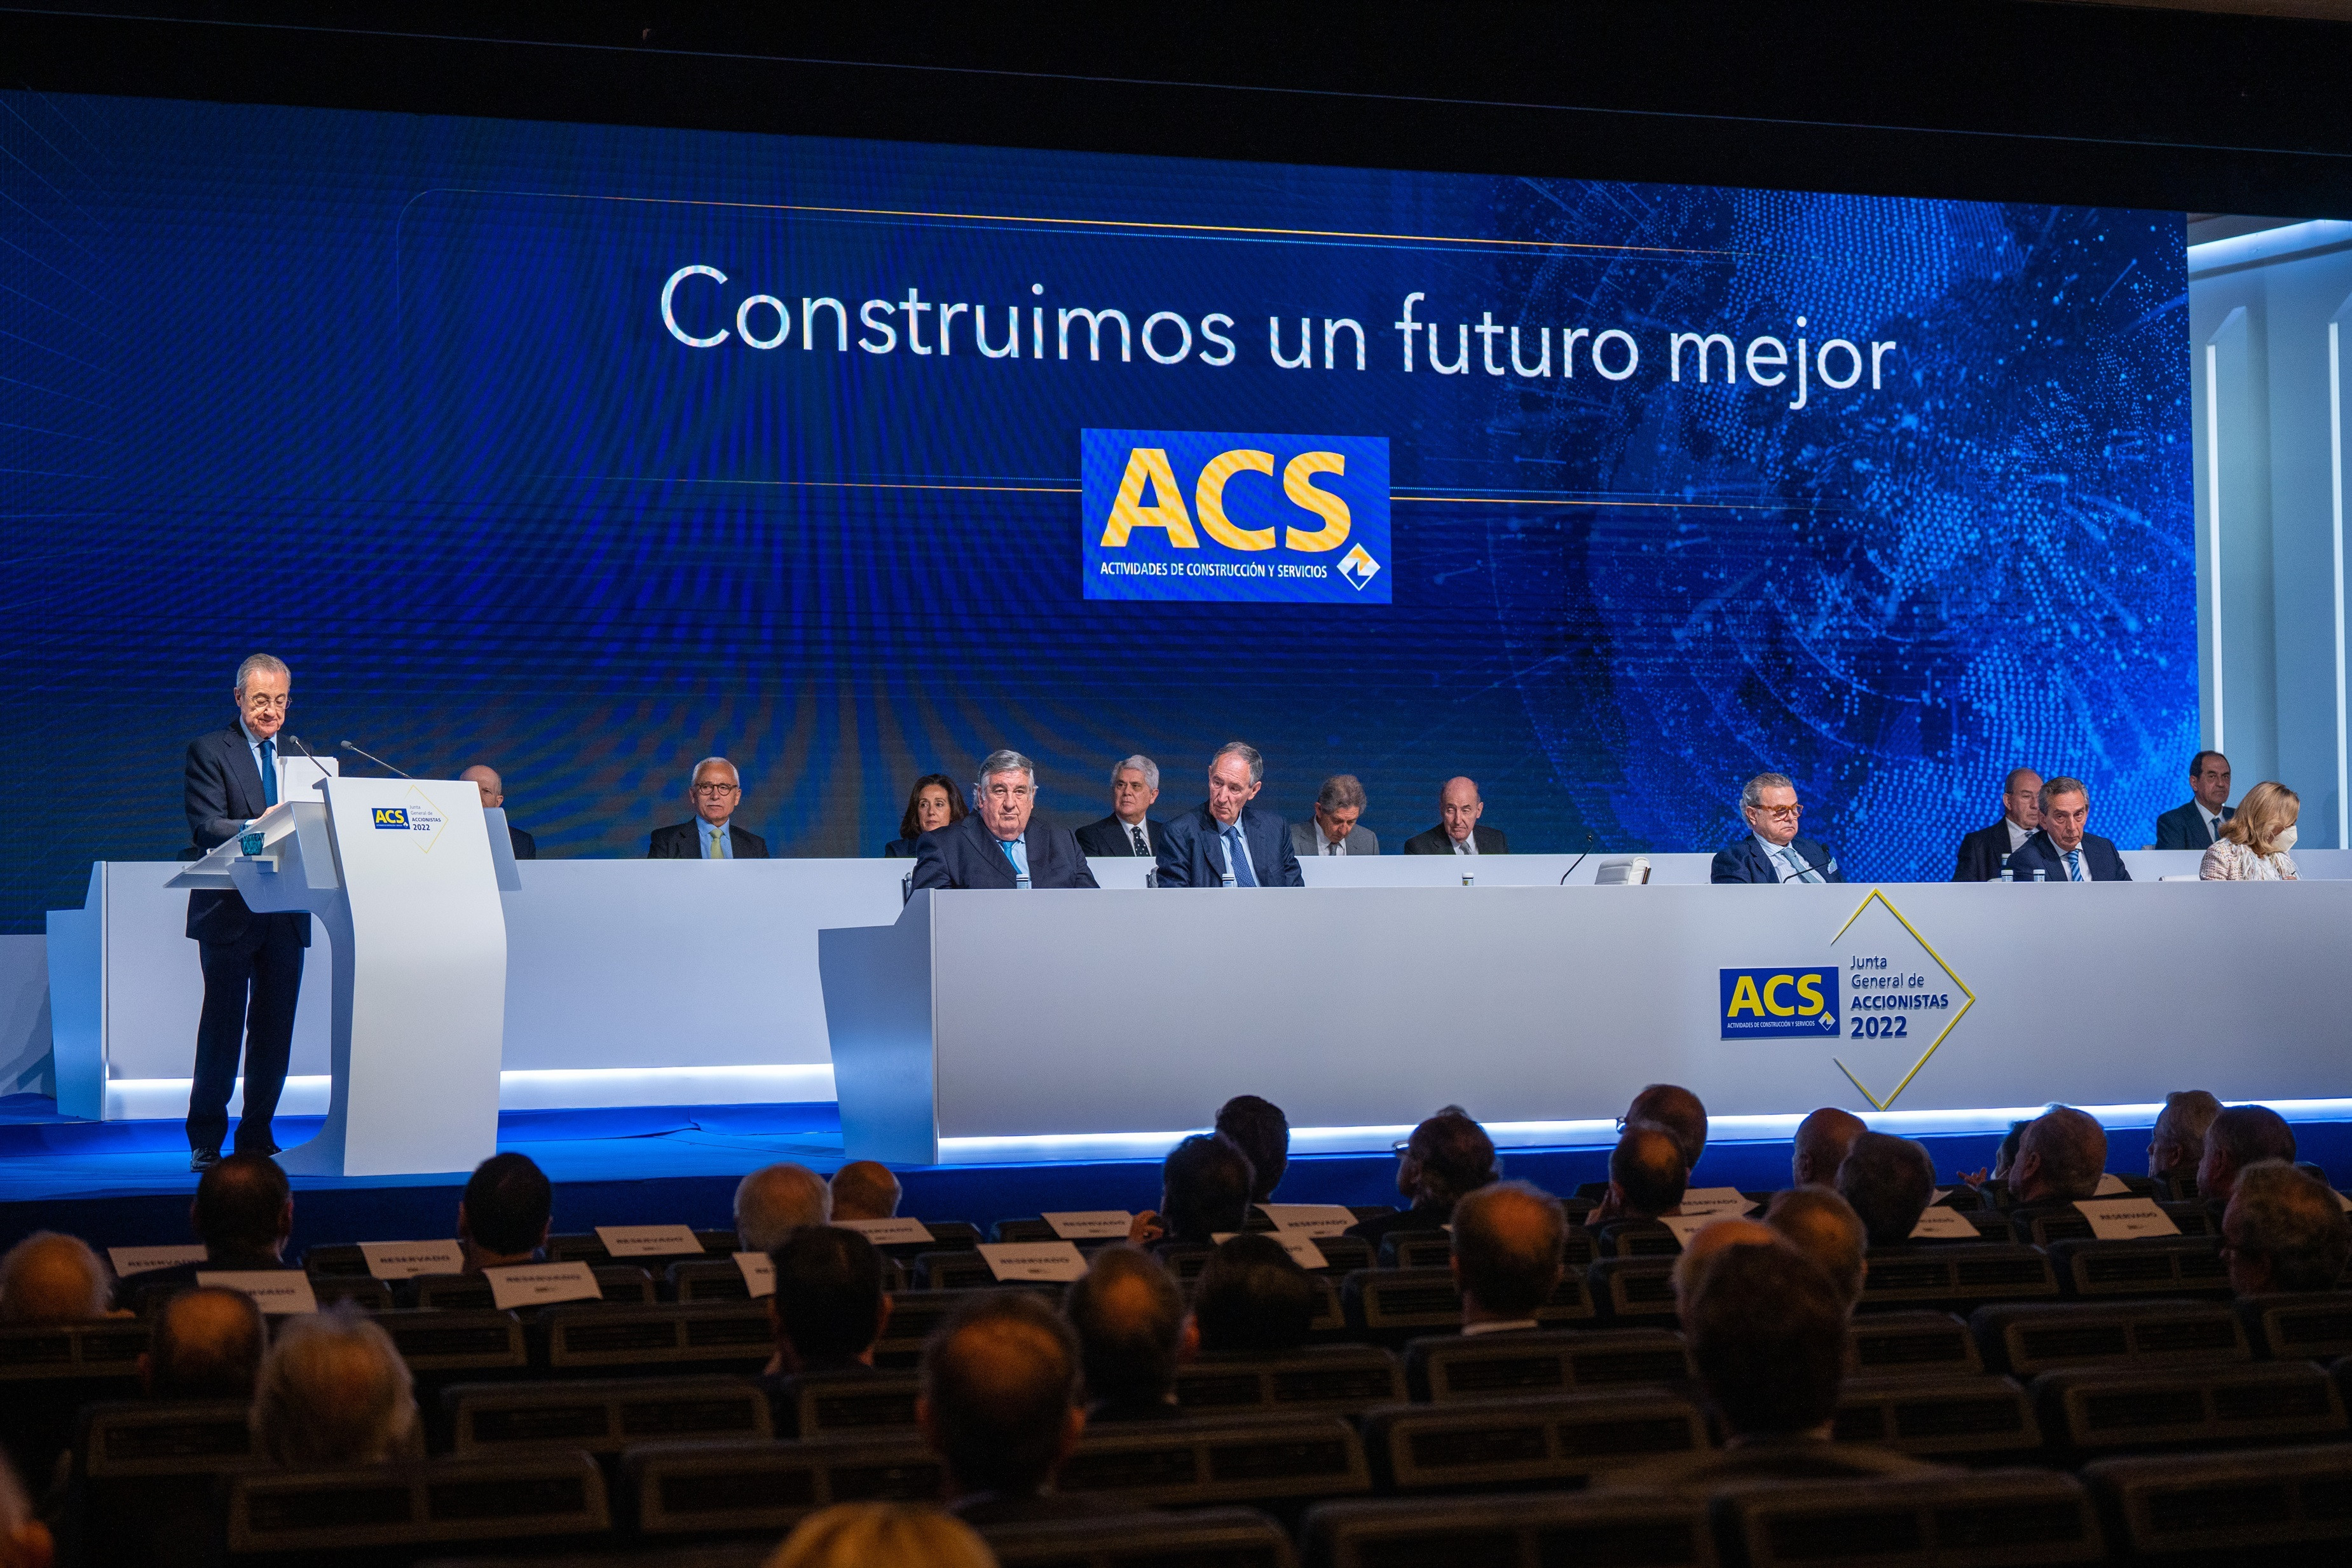 Junta general accionistas de ACS en 2022 presidida por Florentino Pérez